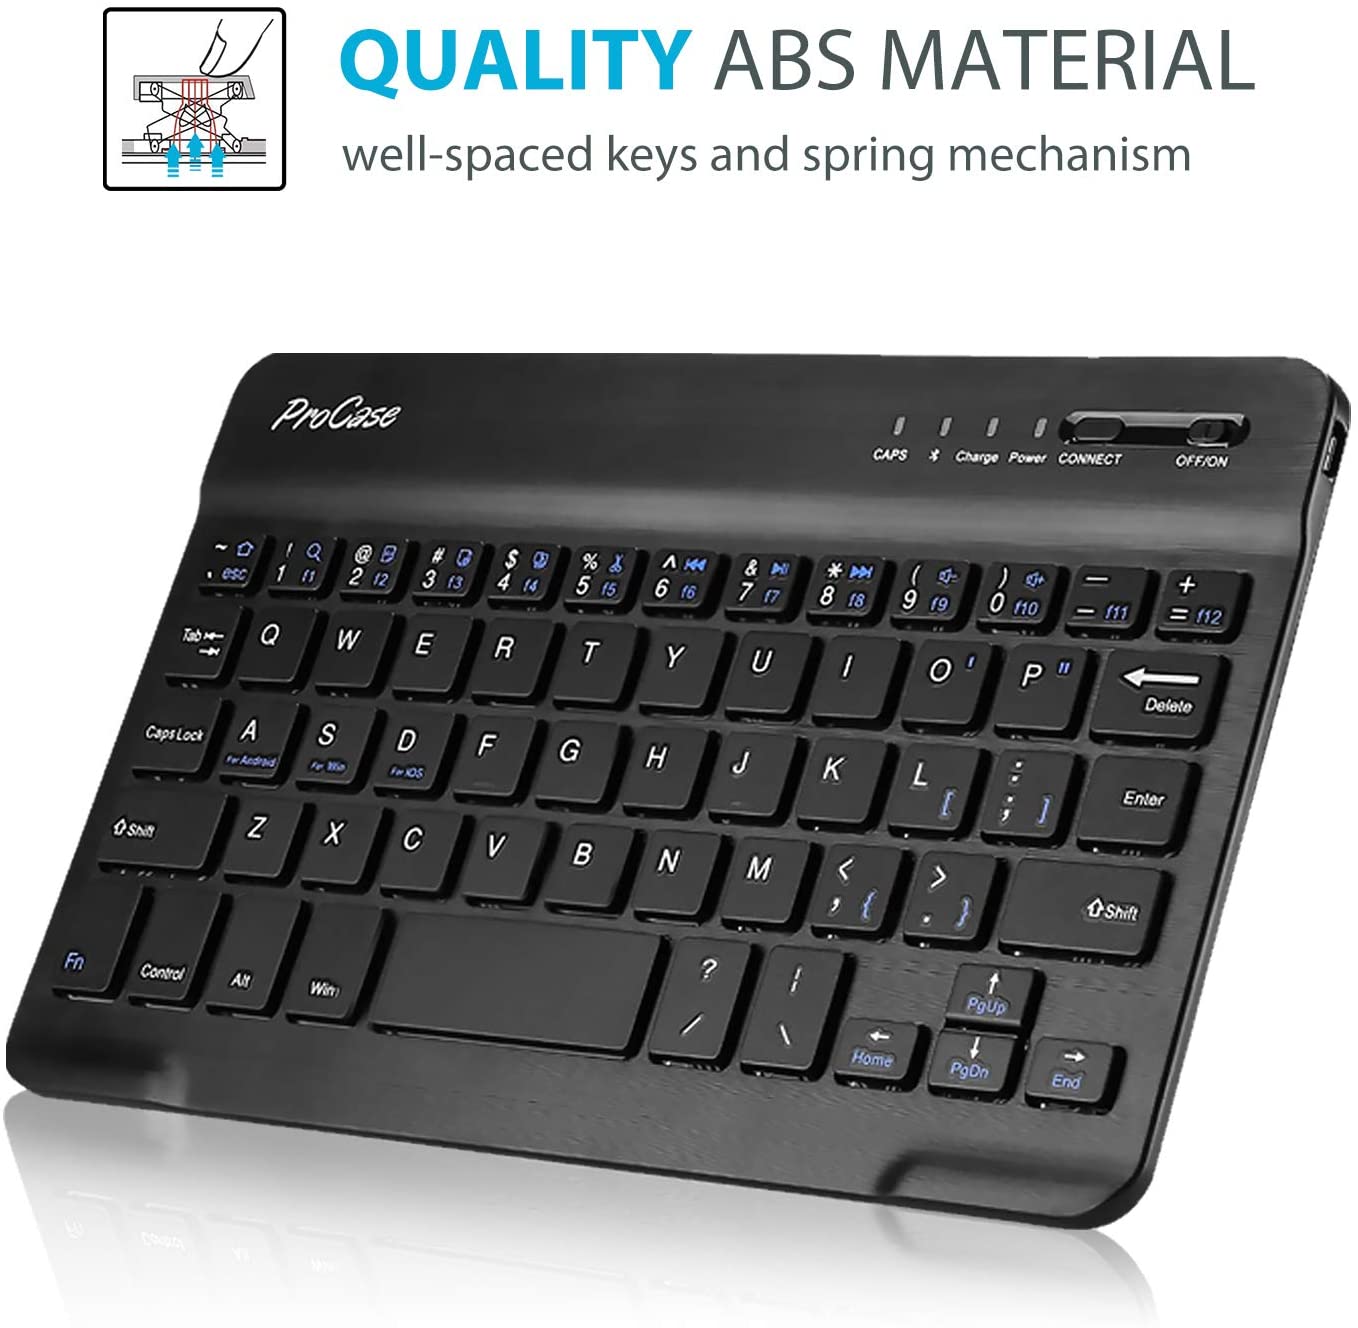 Galaxy Tab A 8.4 2020 T307 Lightweight Case with Detachable Wireless Keyboard | Yapears